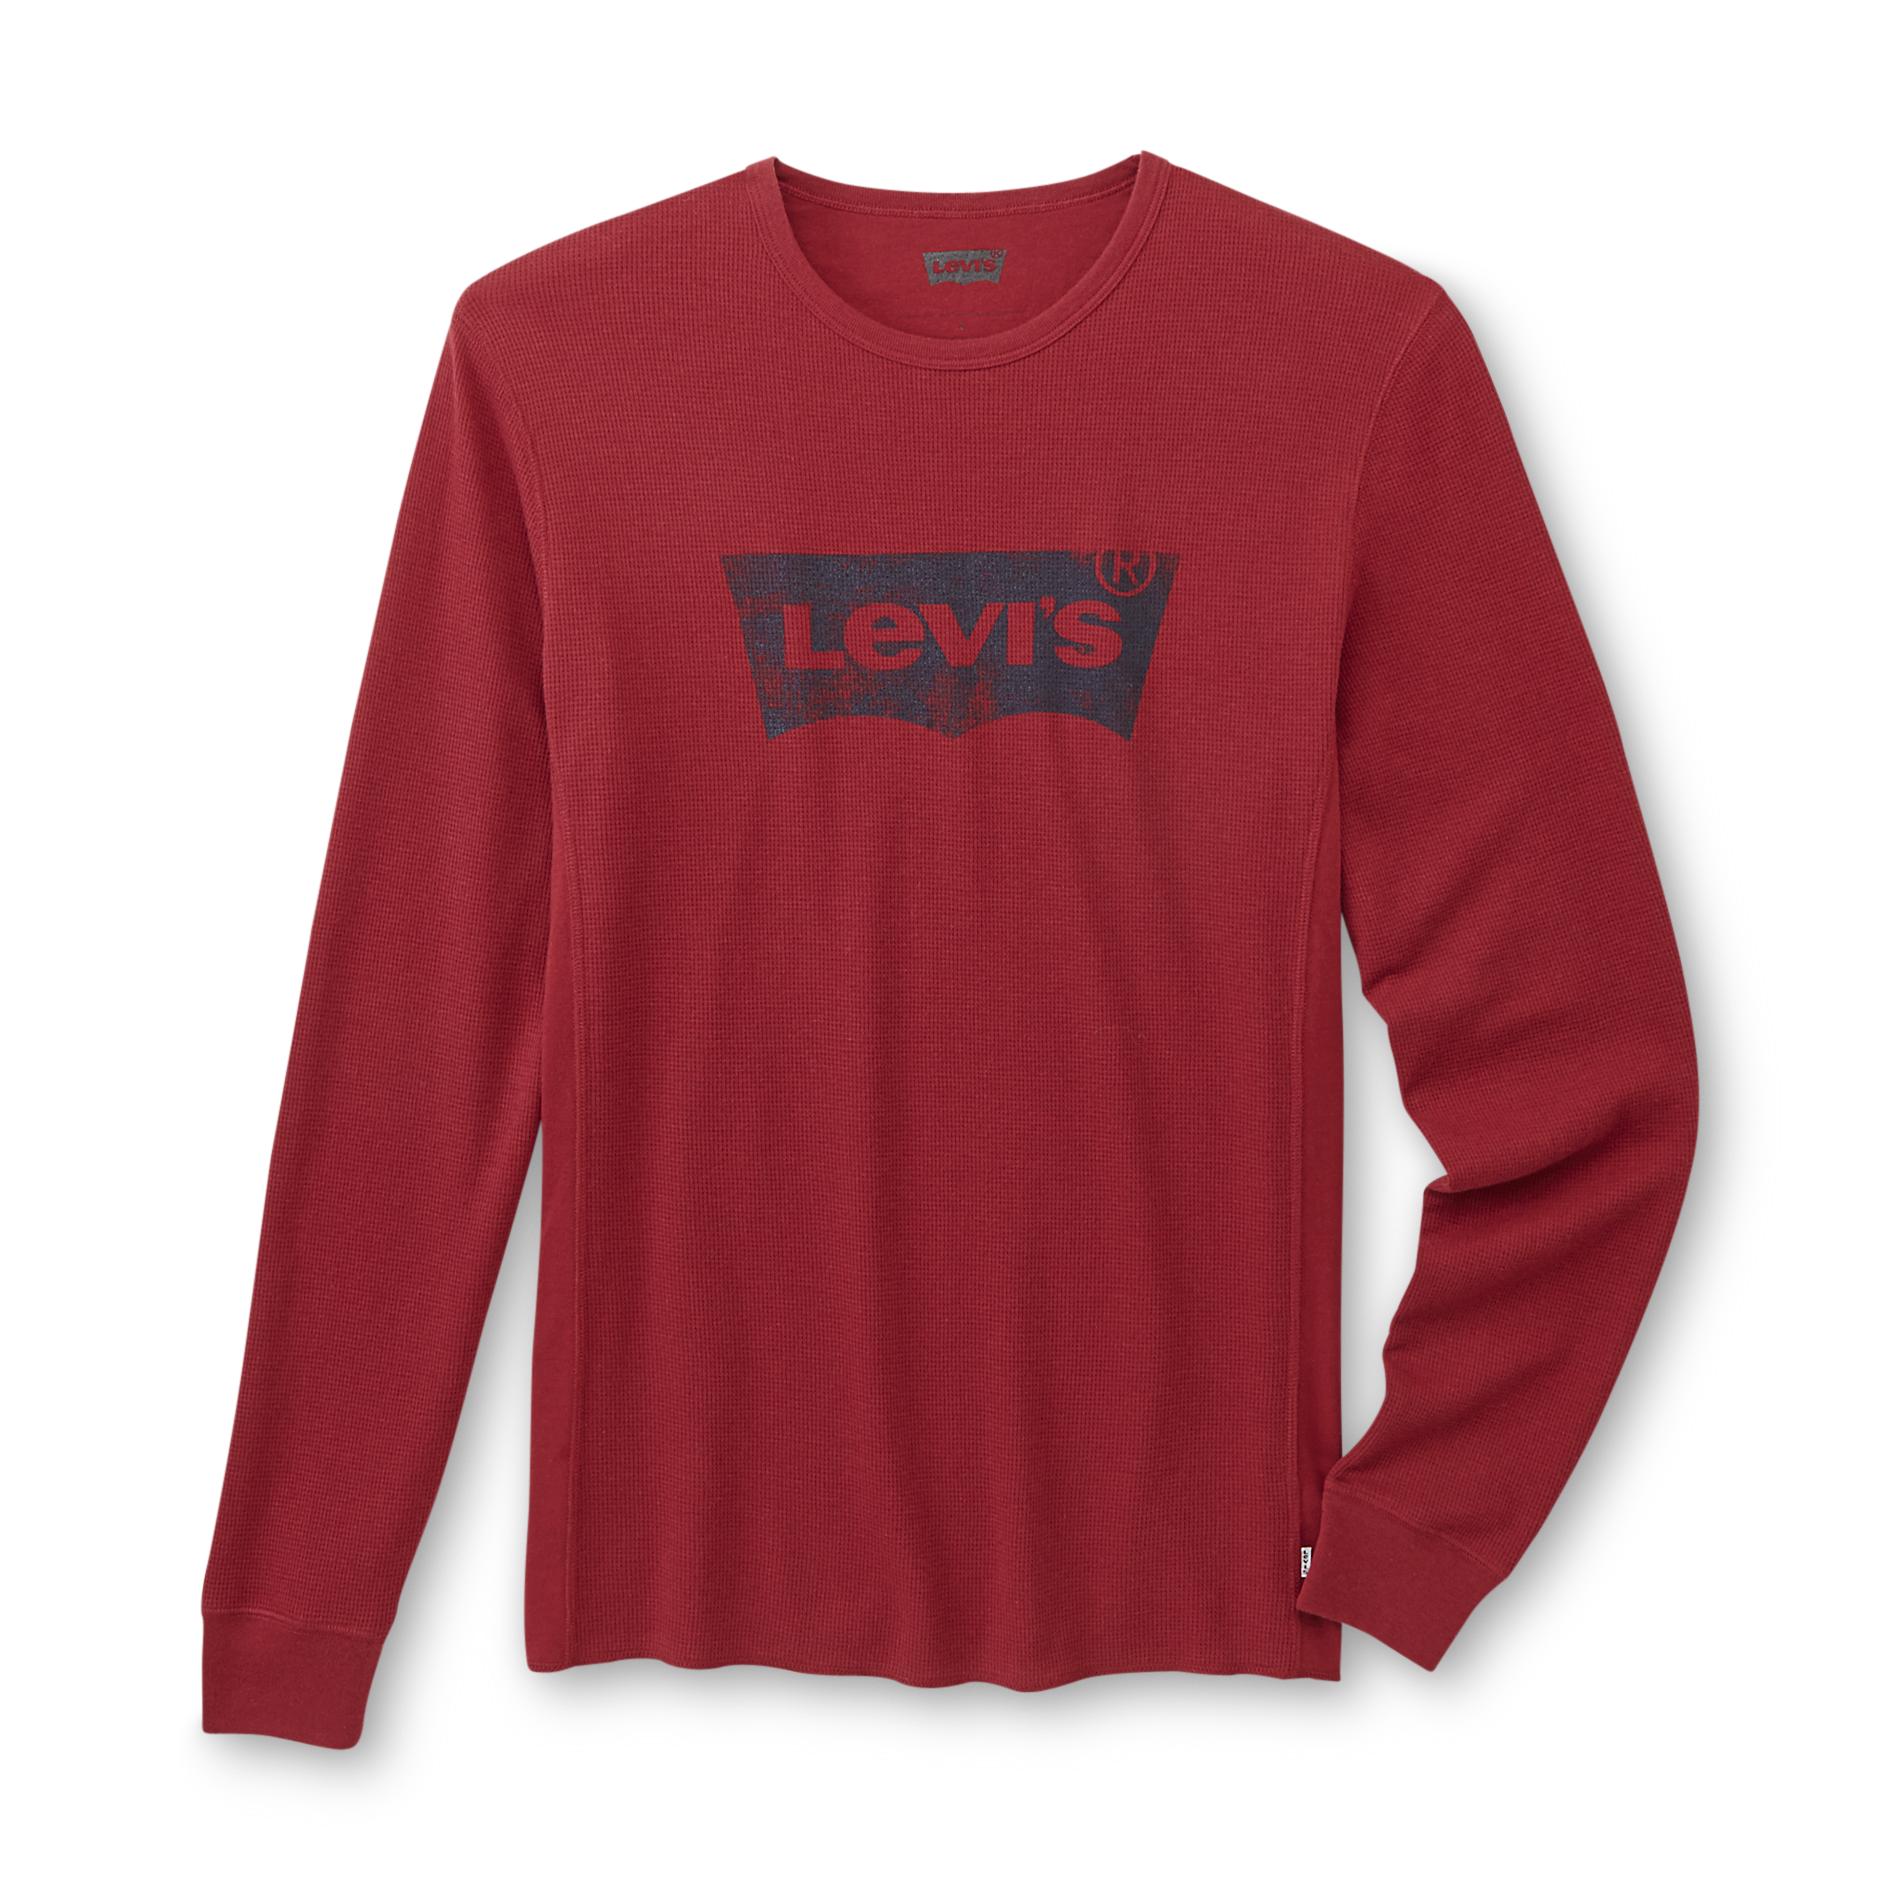 Levi's Men's Big & Tall Graphic Thermal Shirt